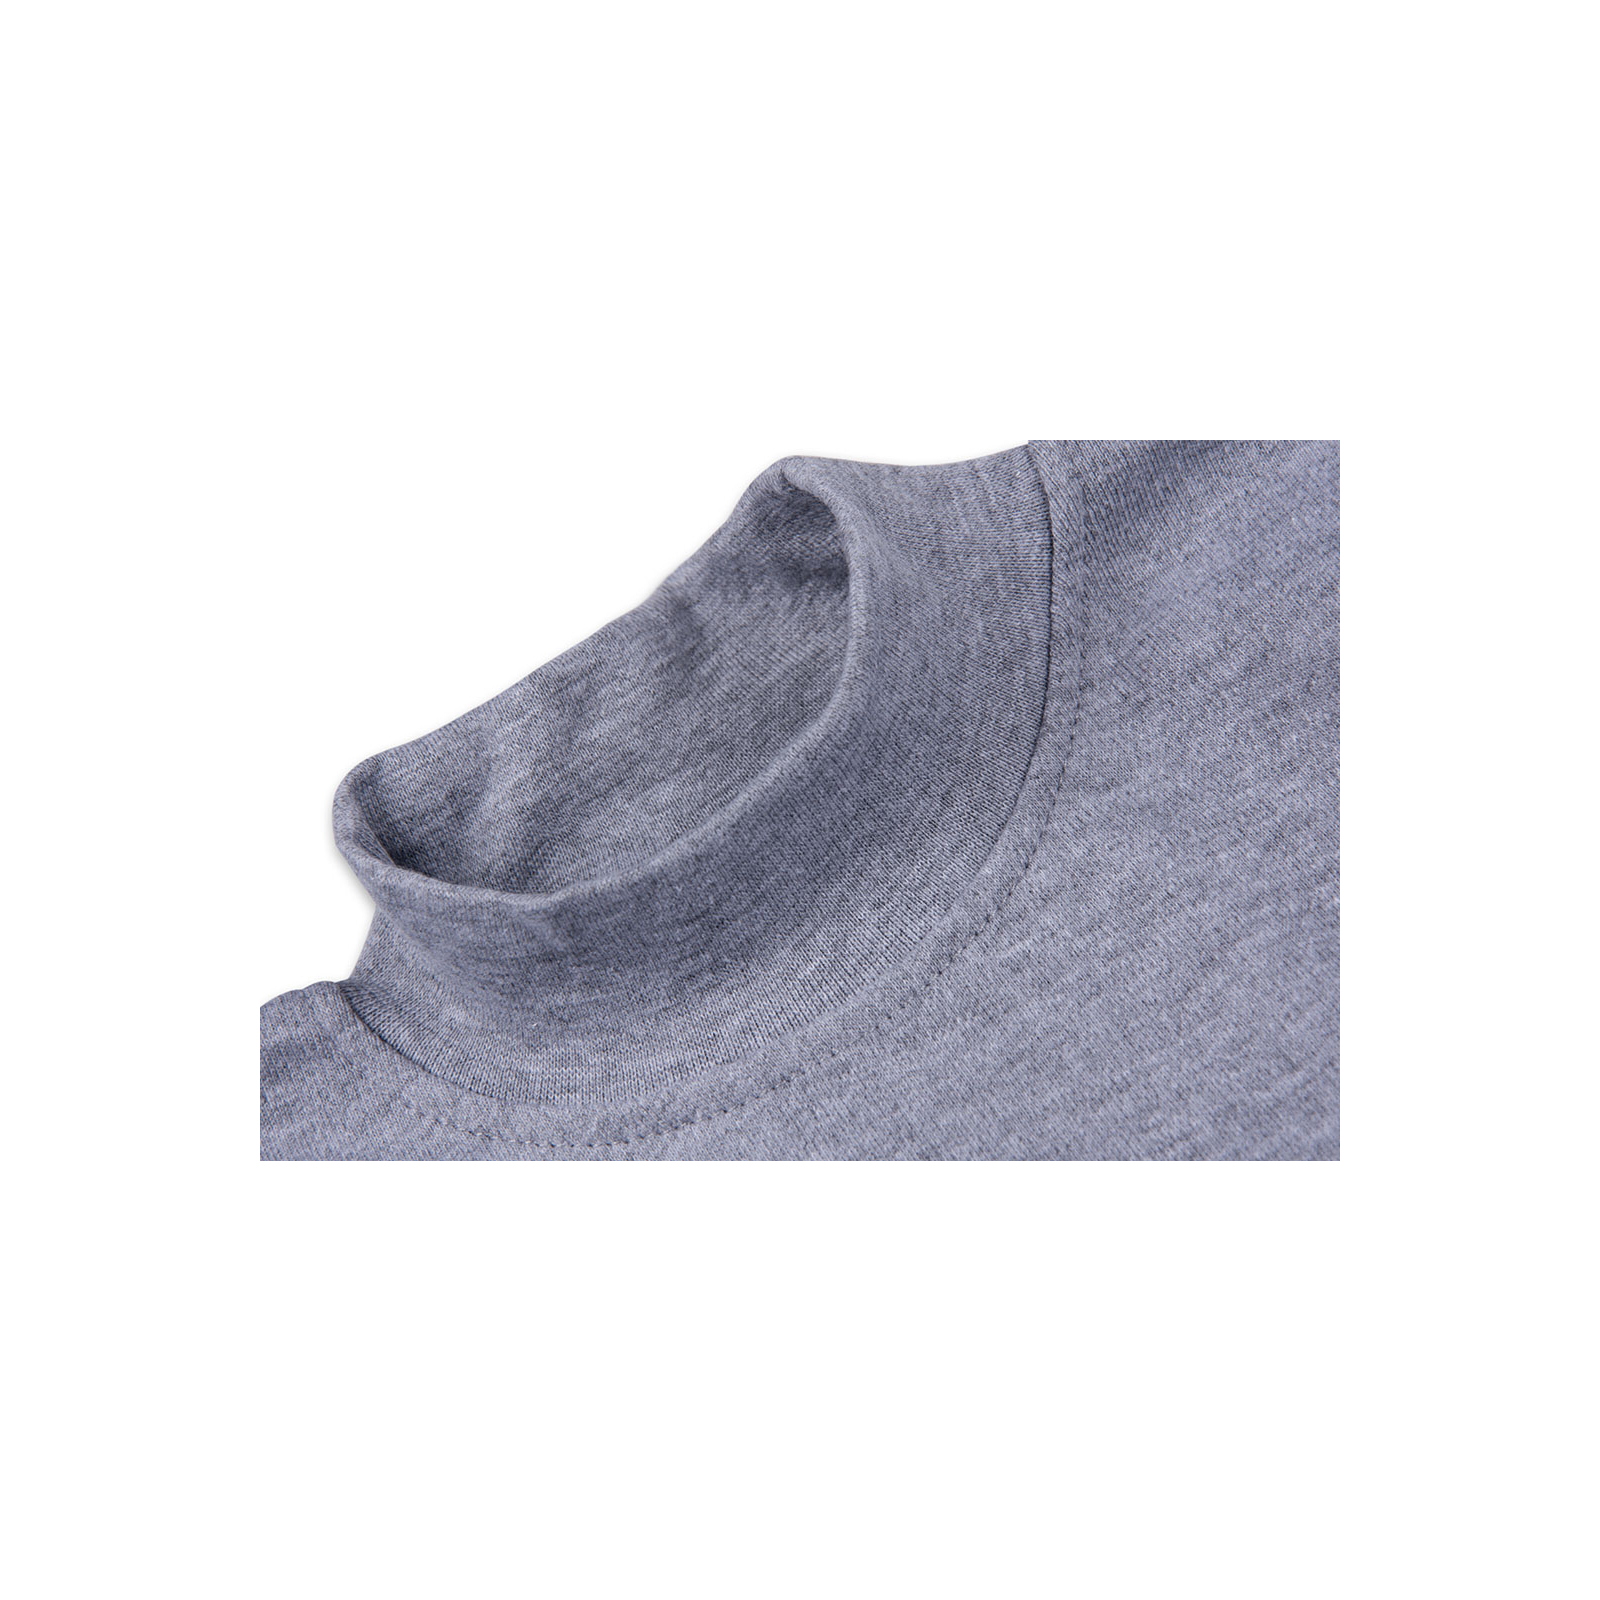 Кофта Lovetti водолазка серая меланжевая (1012-116-gray) изображение 3